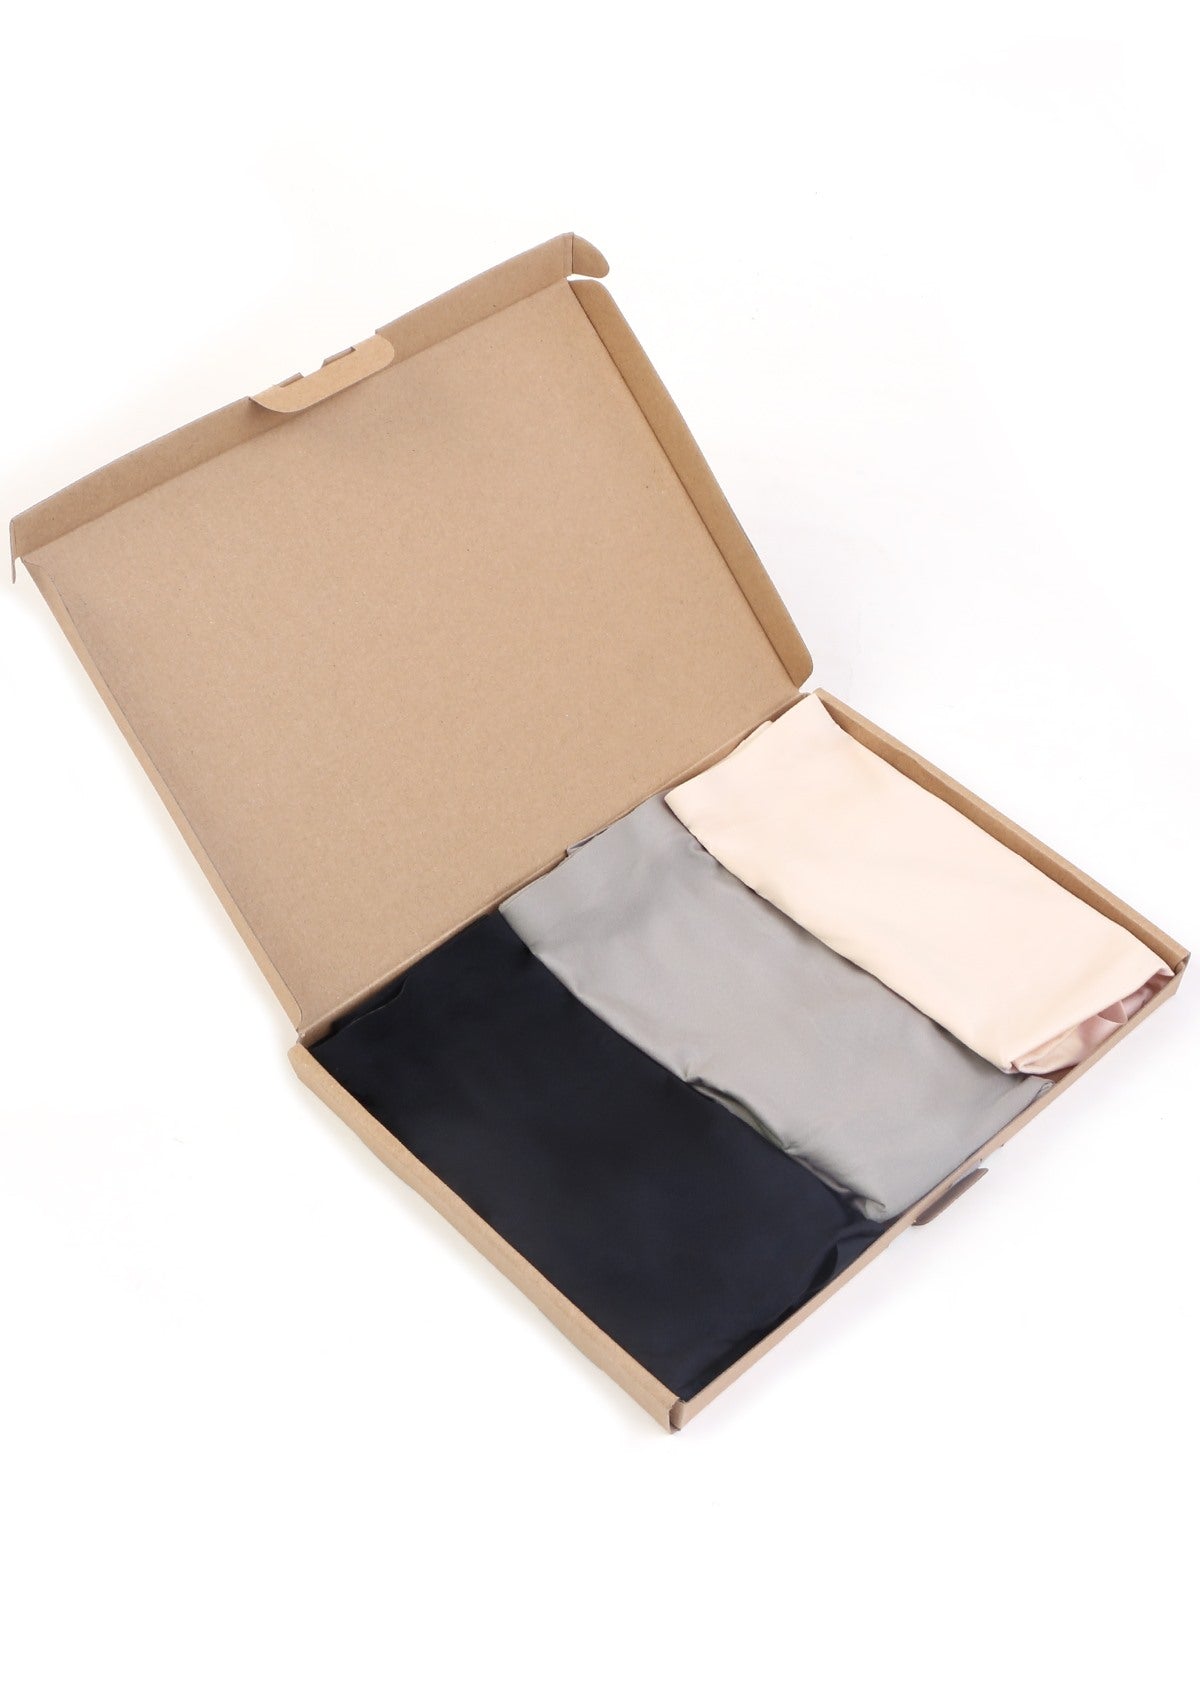 HSIA CoolFit Soft Stretch Seamless Brief Underwear Bundle - 10 Packs/$35 / ②(L-3XL) / 3*Black+2*Peach Beige